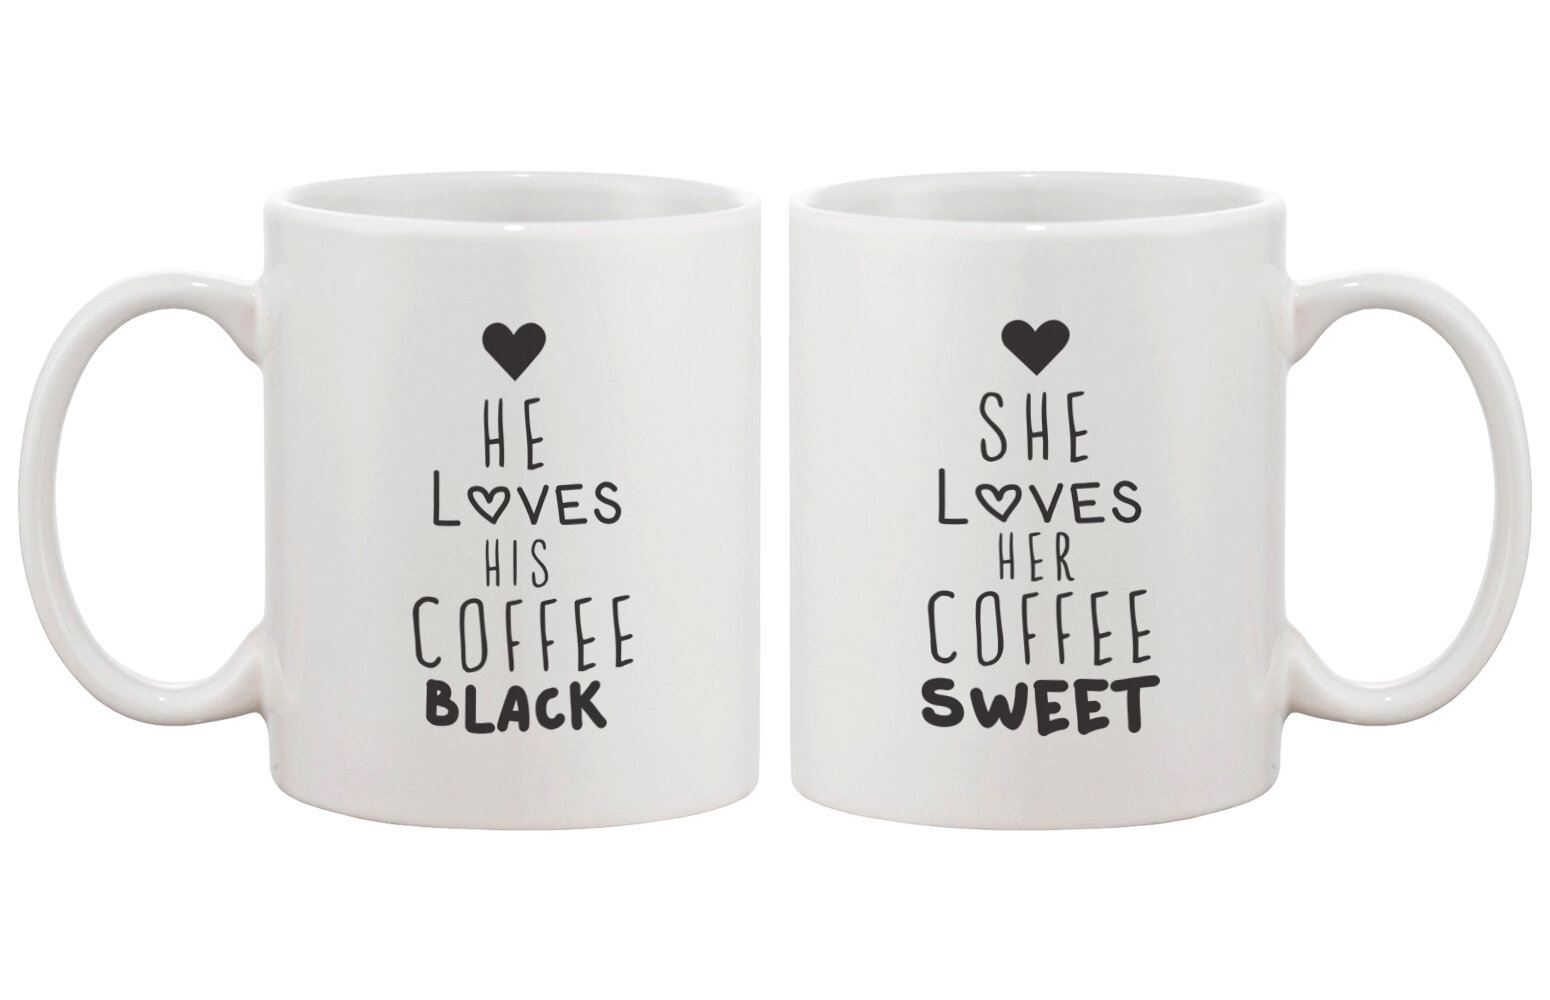 I Love You Human Diary Other Half Couple Partner Heart Tea Coffee Ceramic Mug 